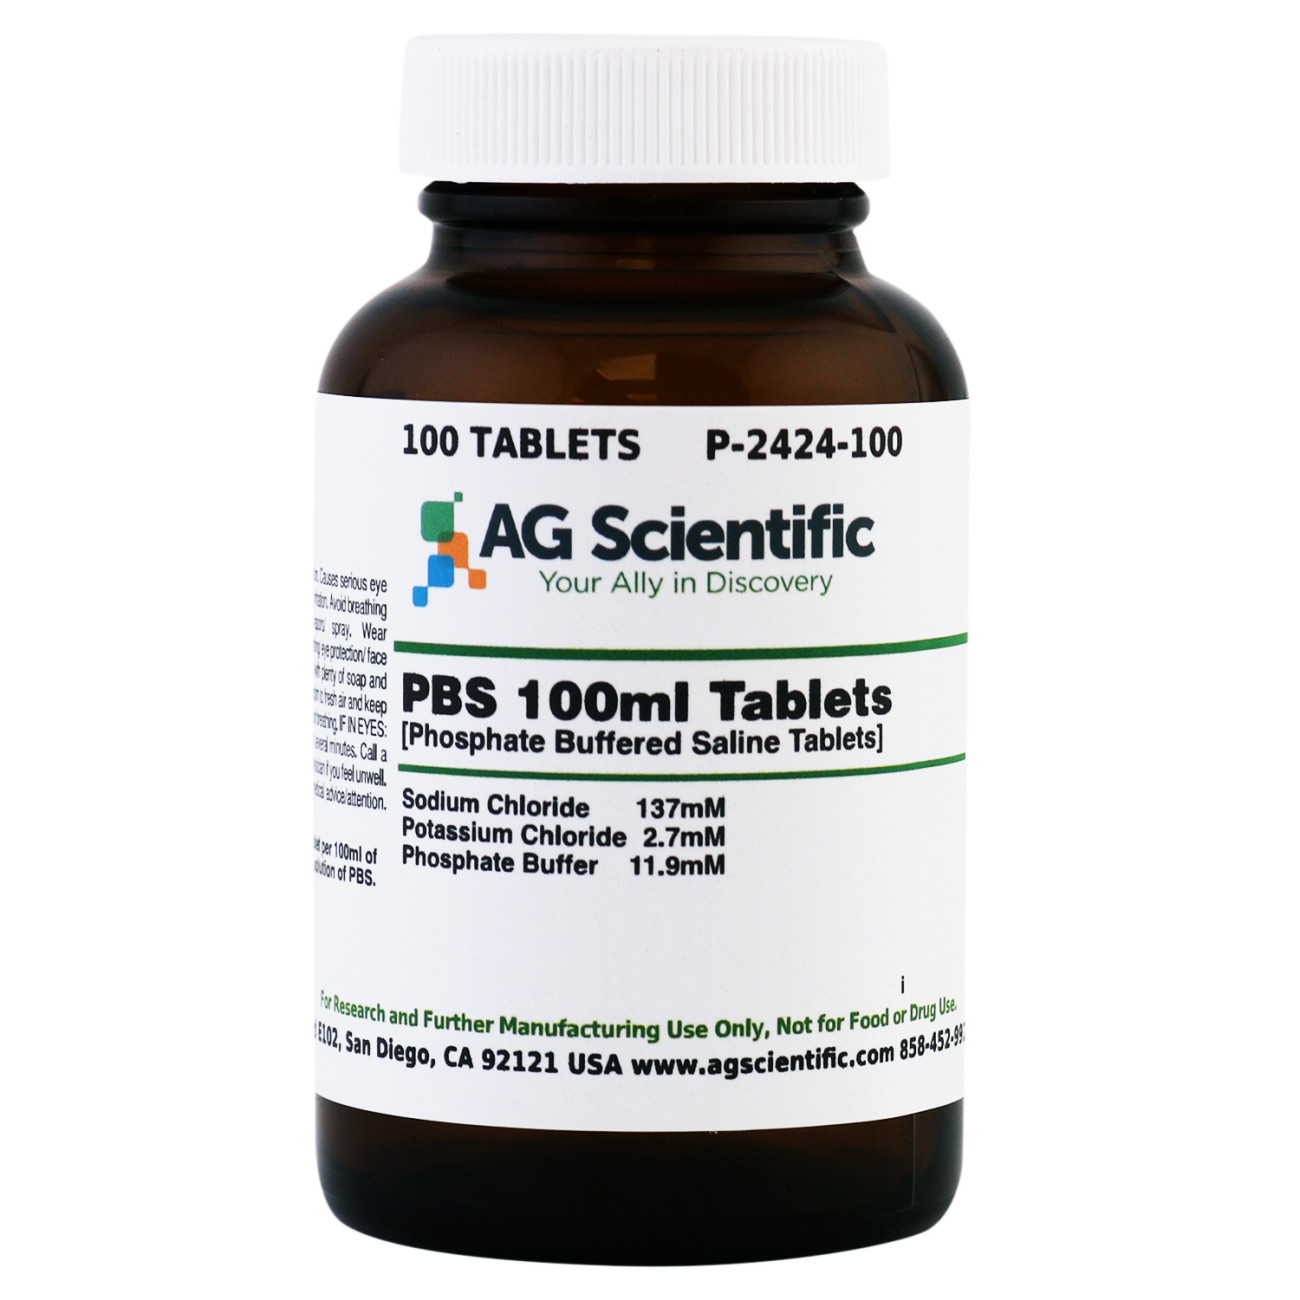 PBS, 100 mL Tablets, 100 Tablets